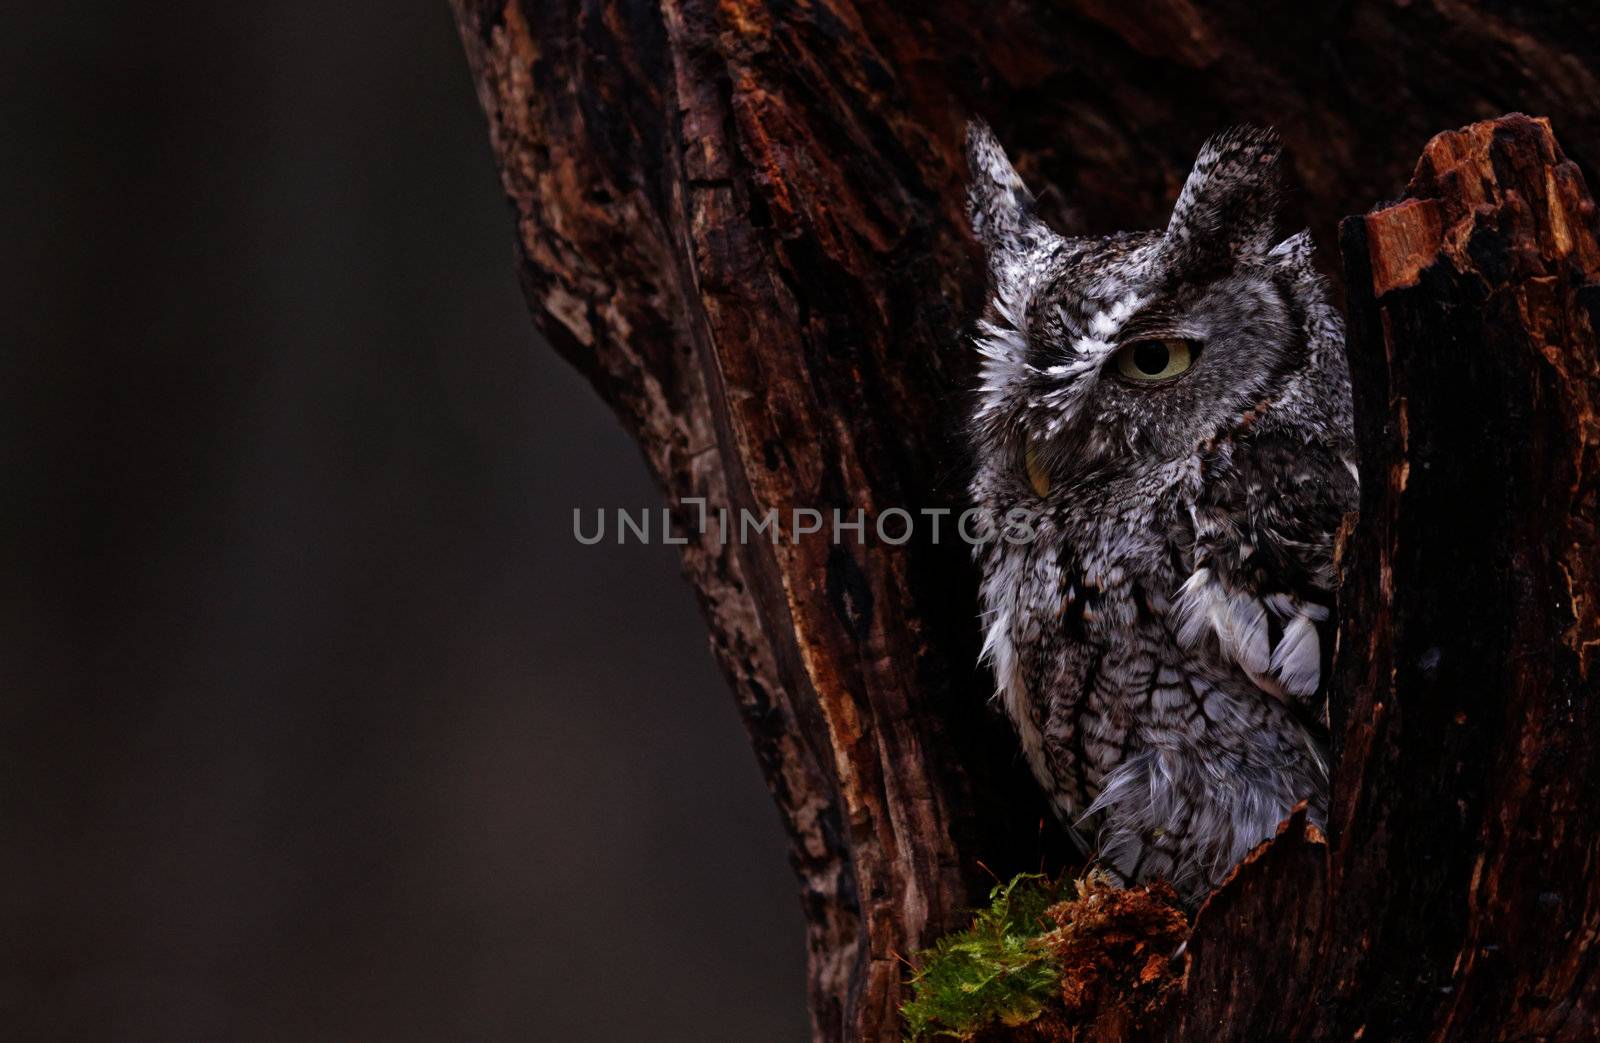 A close-up of an Eastern Screech Owl (Megascops asio) sitting in a stump.
